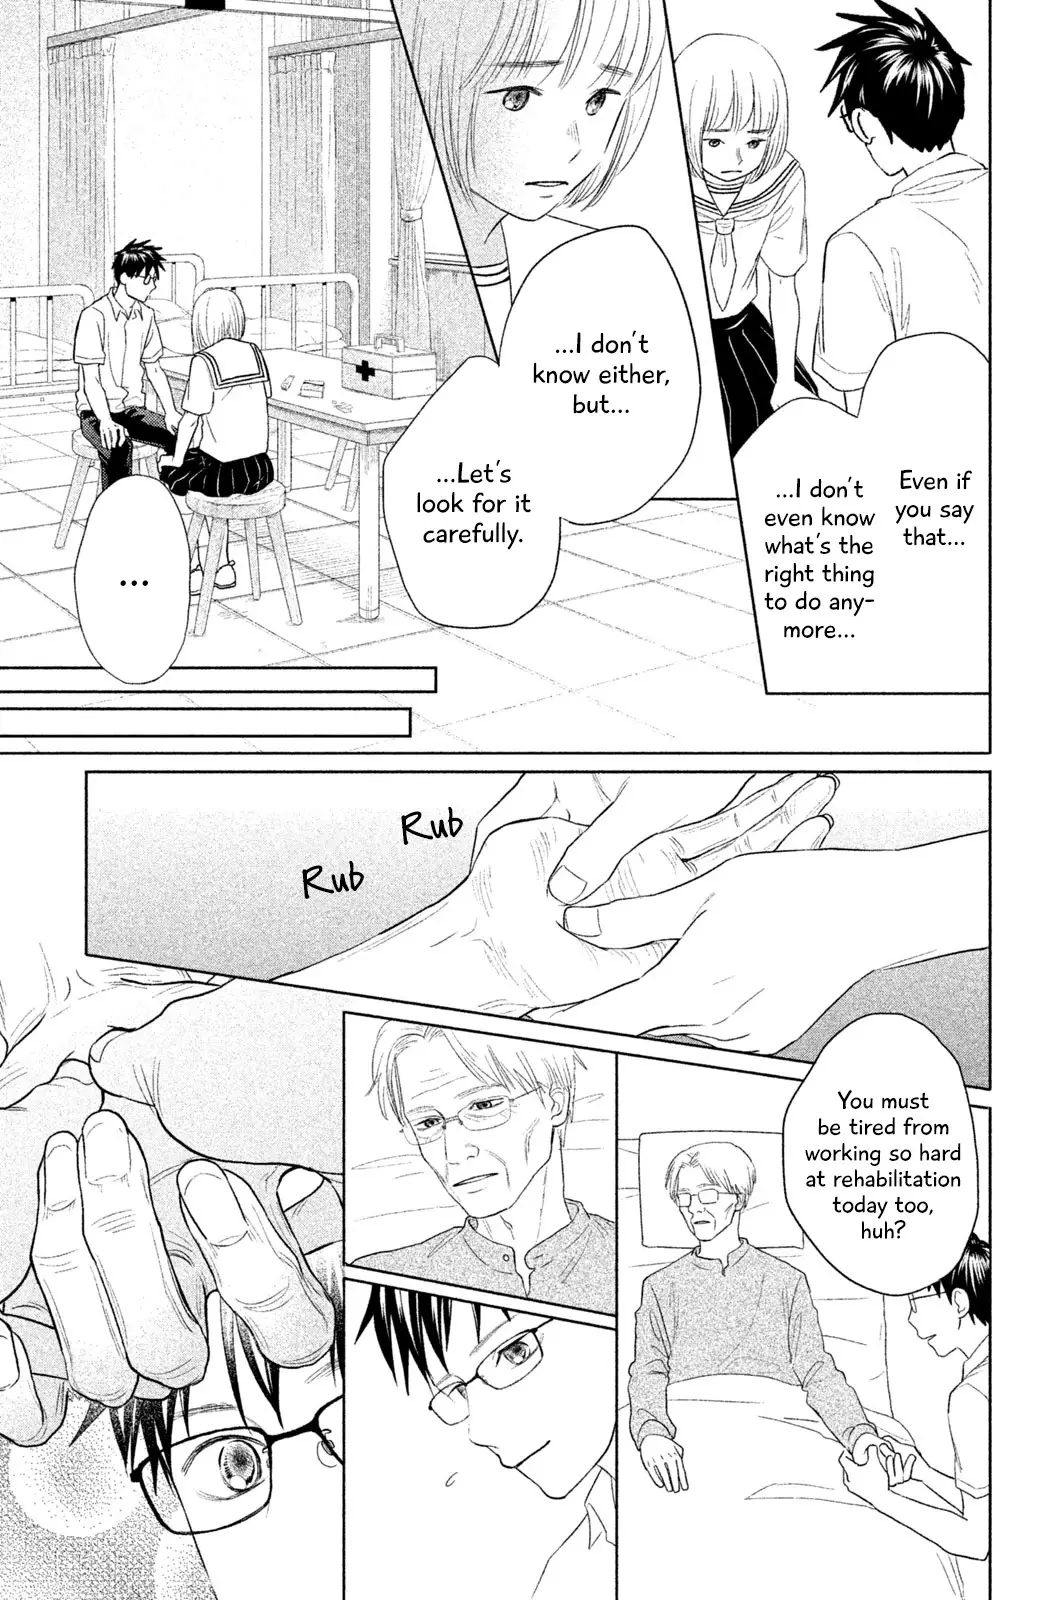 Chihayafuru: Middle School Arc - 9 page 18